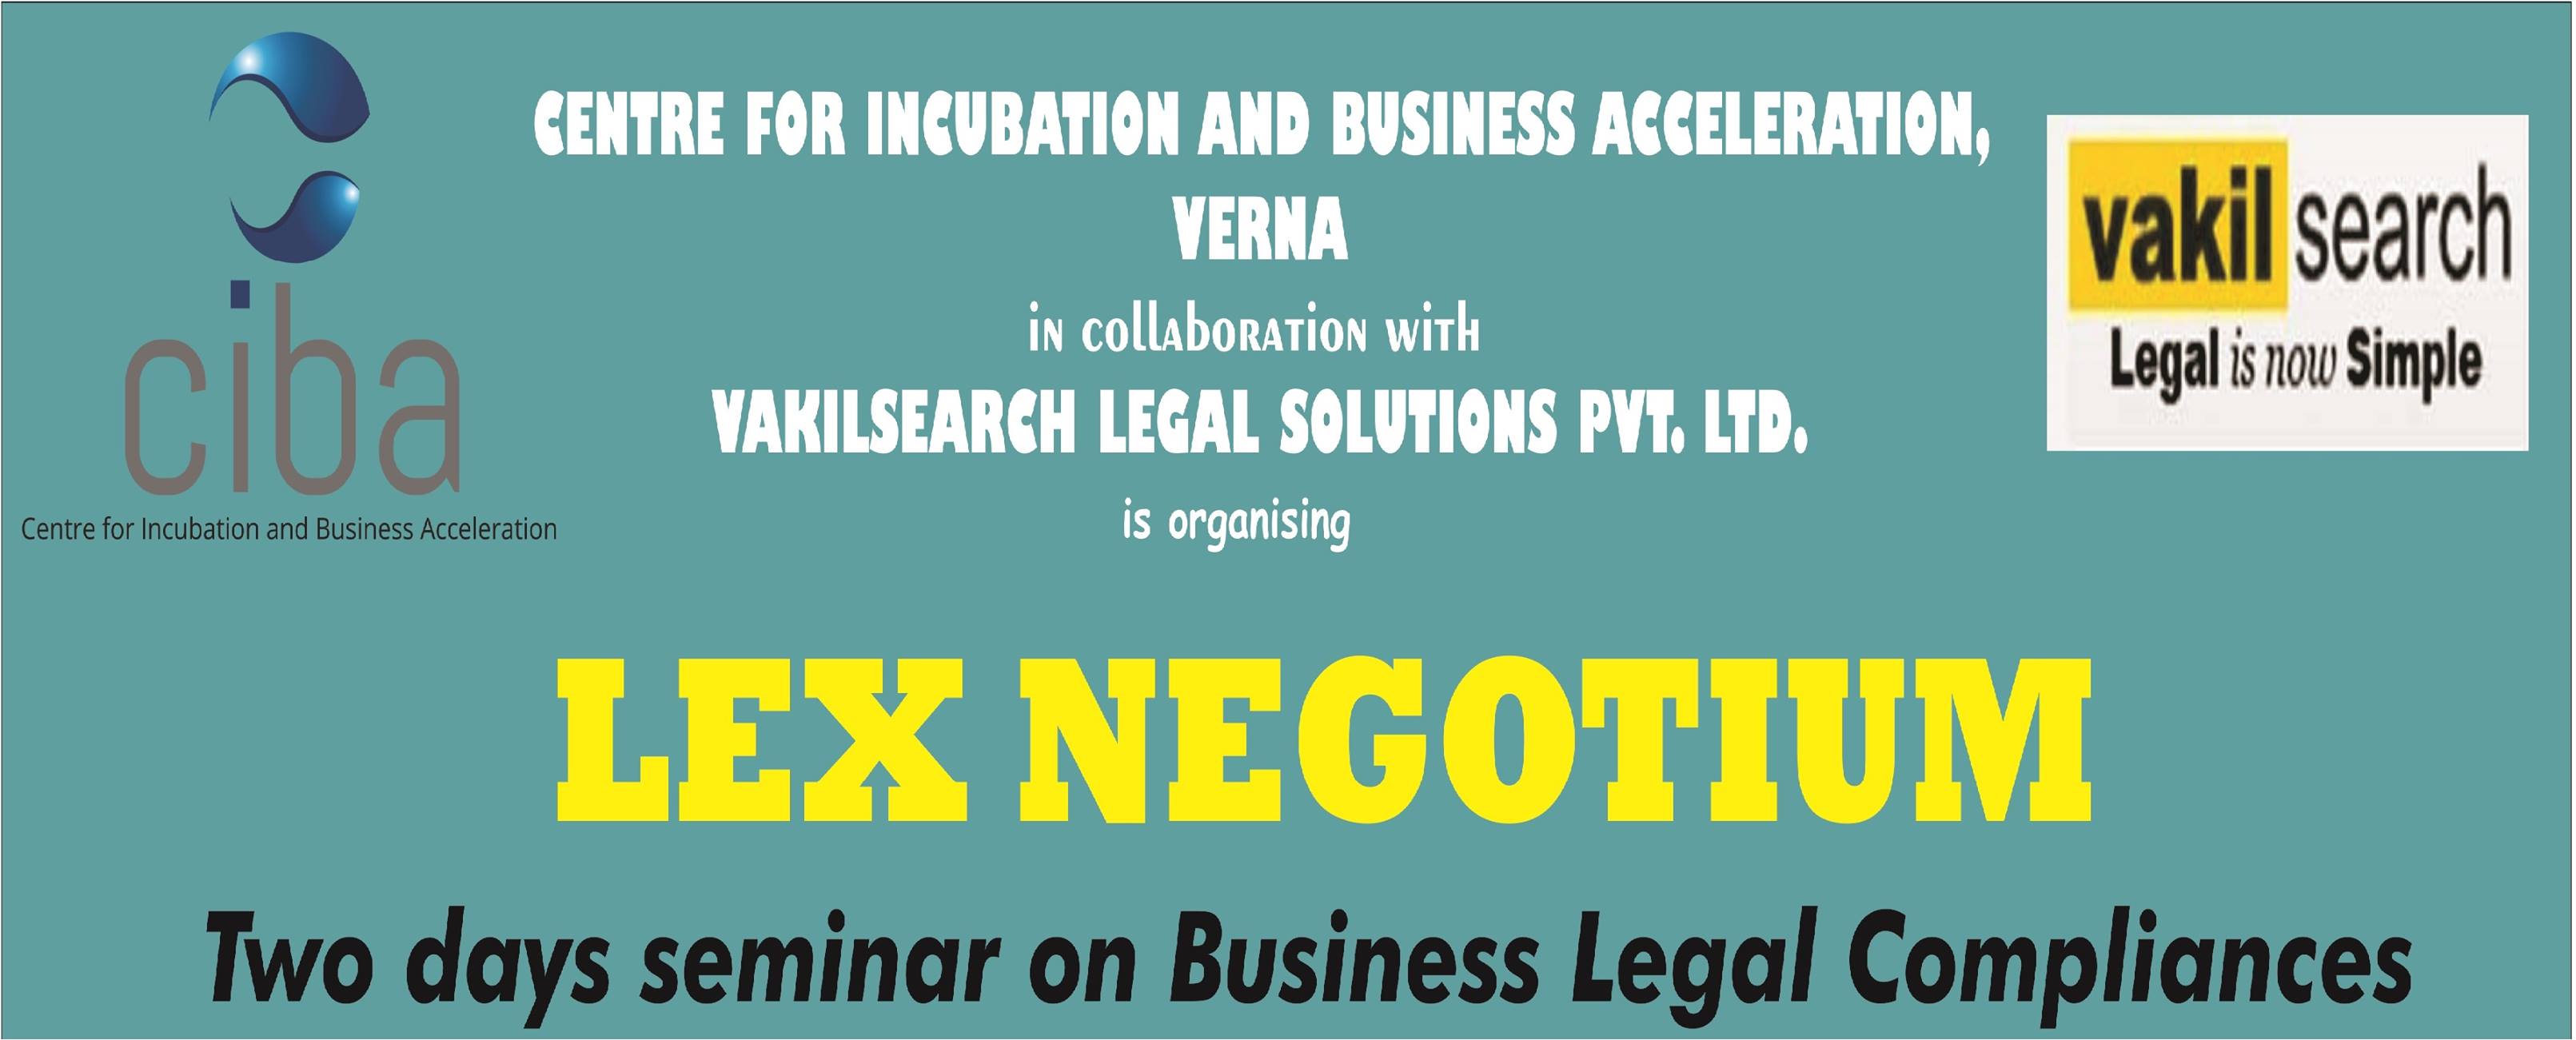 ciba-LEX NEGOTIUM- Seminar on Business Legal Compliance